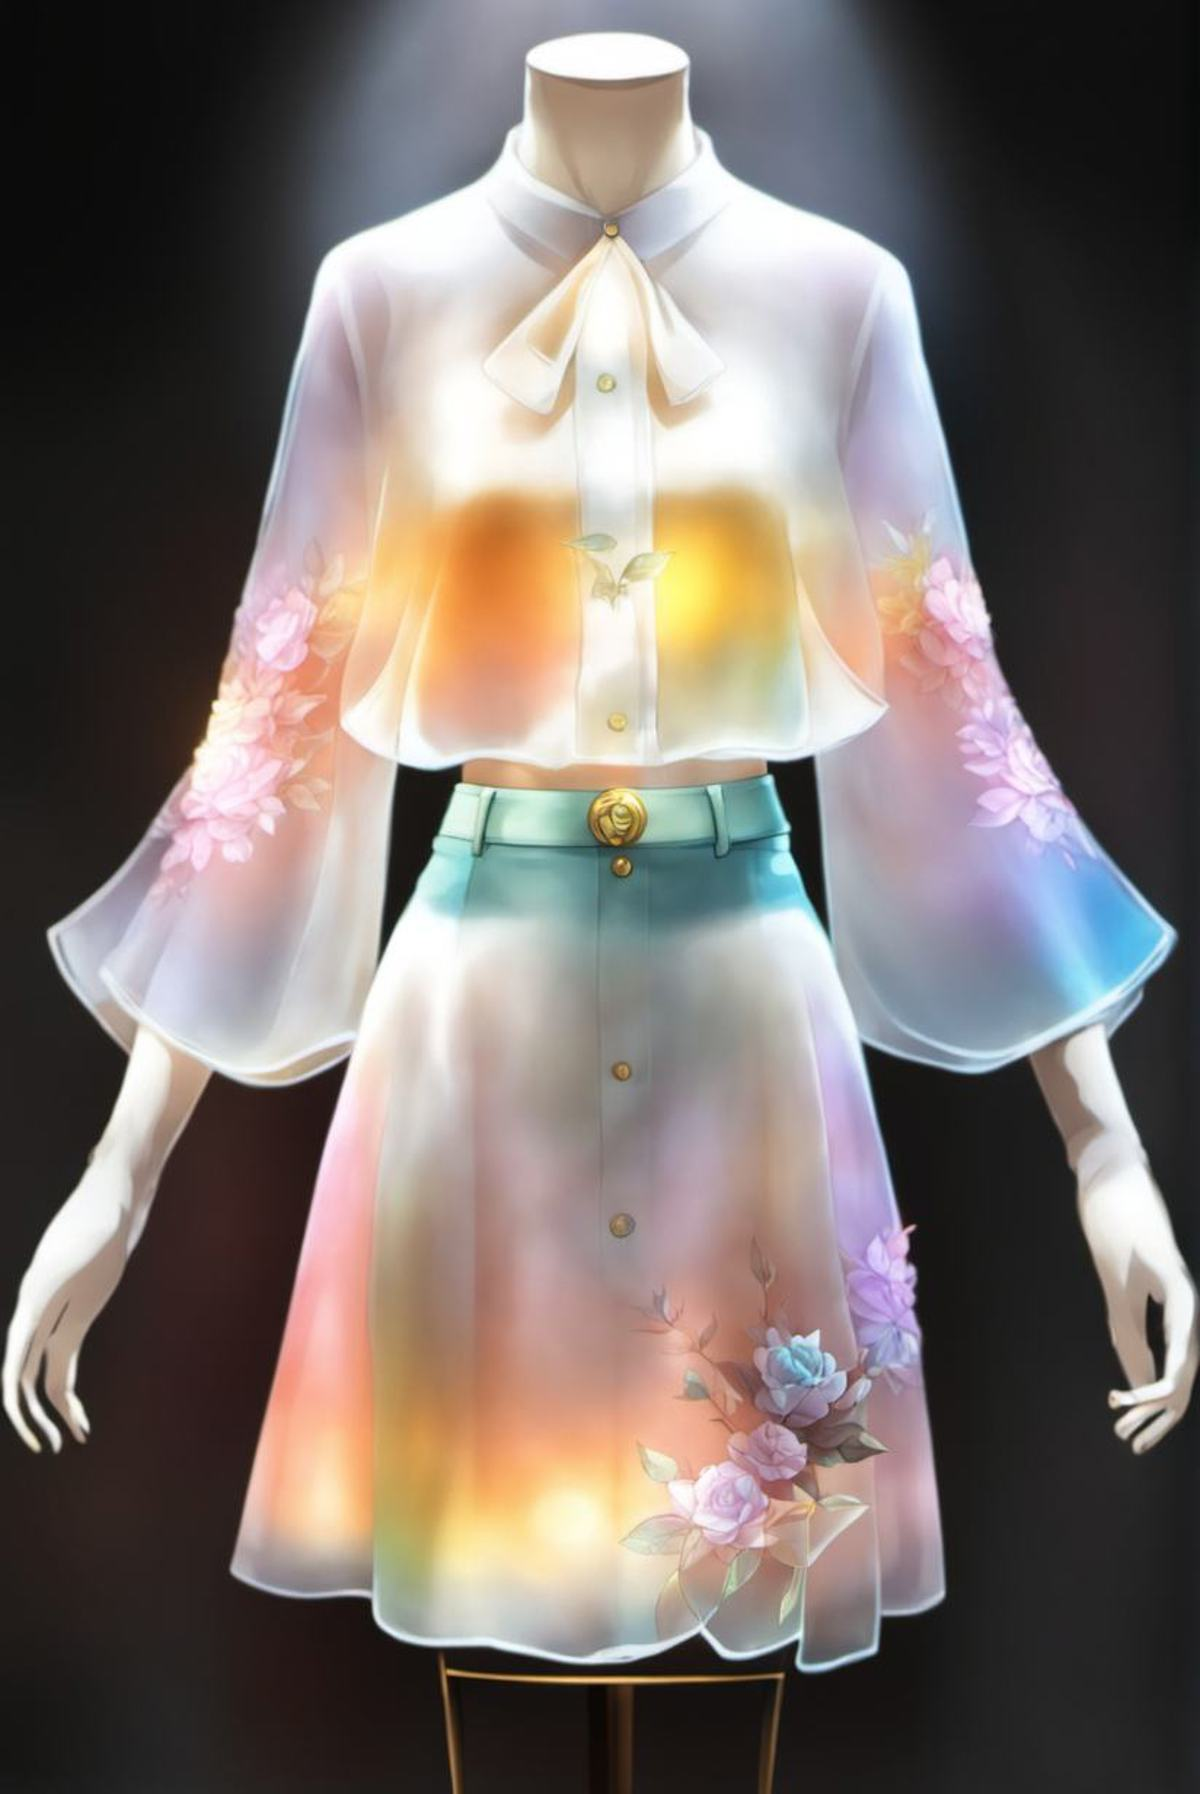 Chinese Style Dress SDXL1.0 image by FuckJack